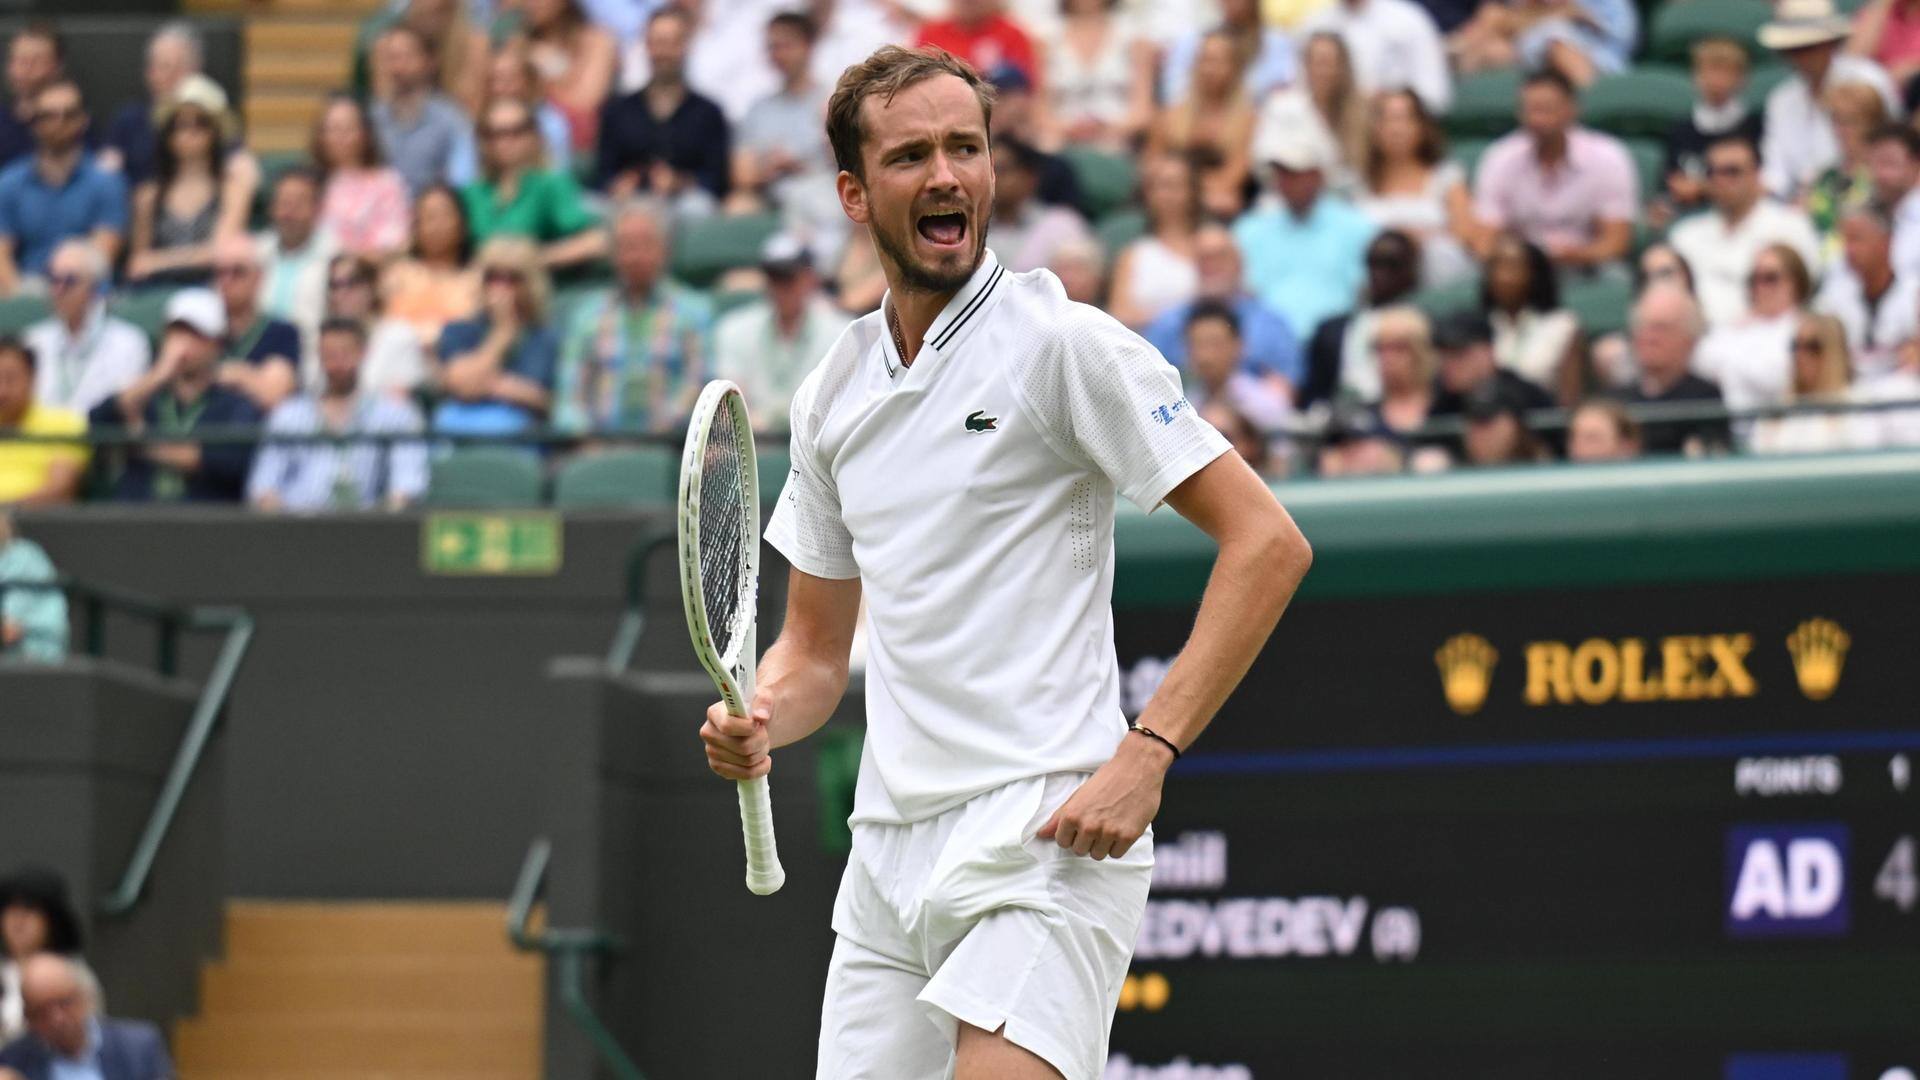 2023 Wimbledon, Daniil Medvedev reaches fourth round: Key stats